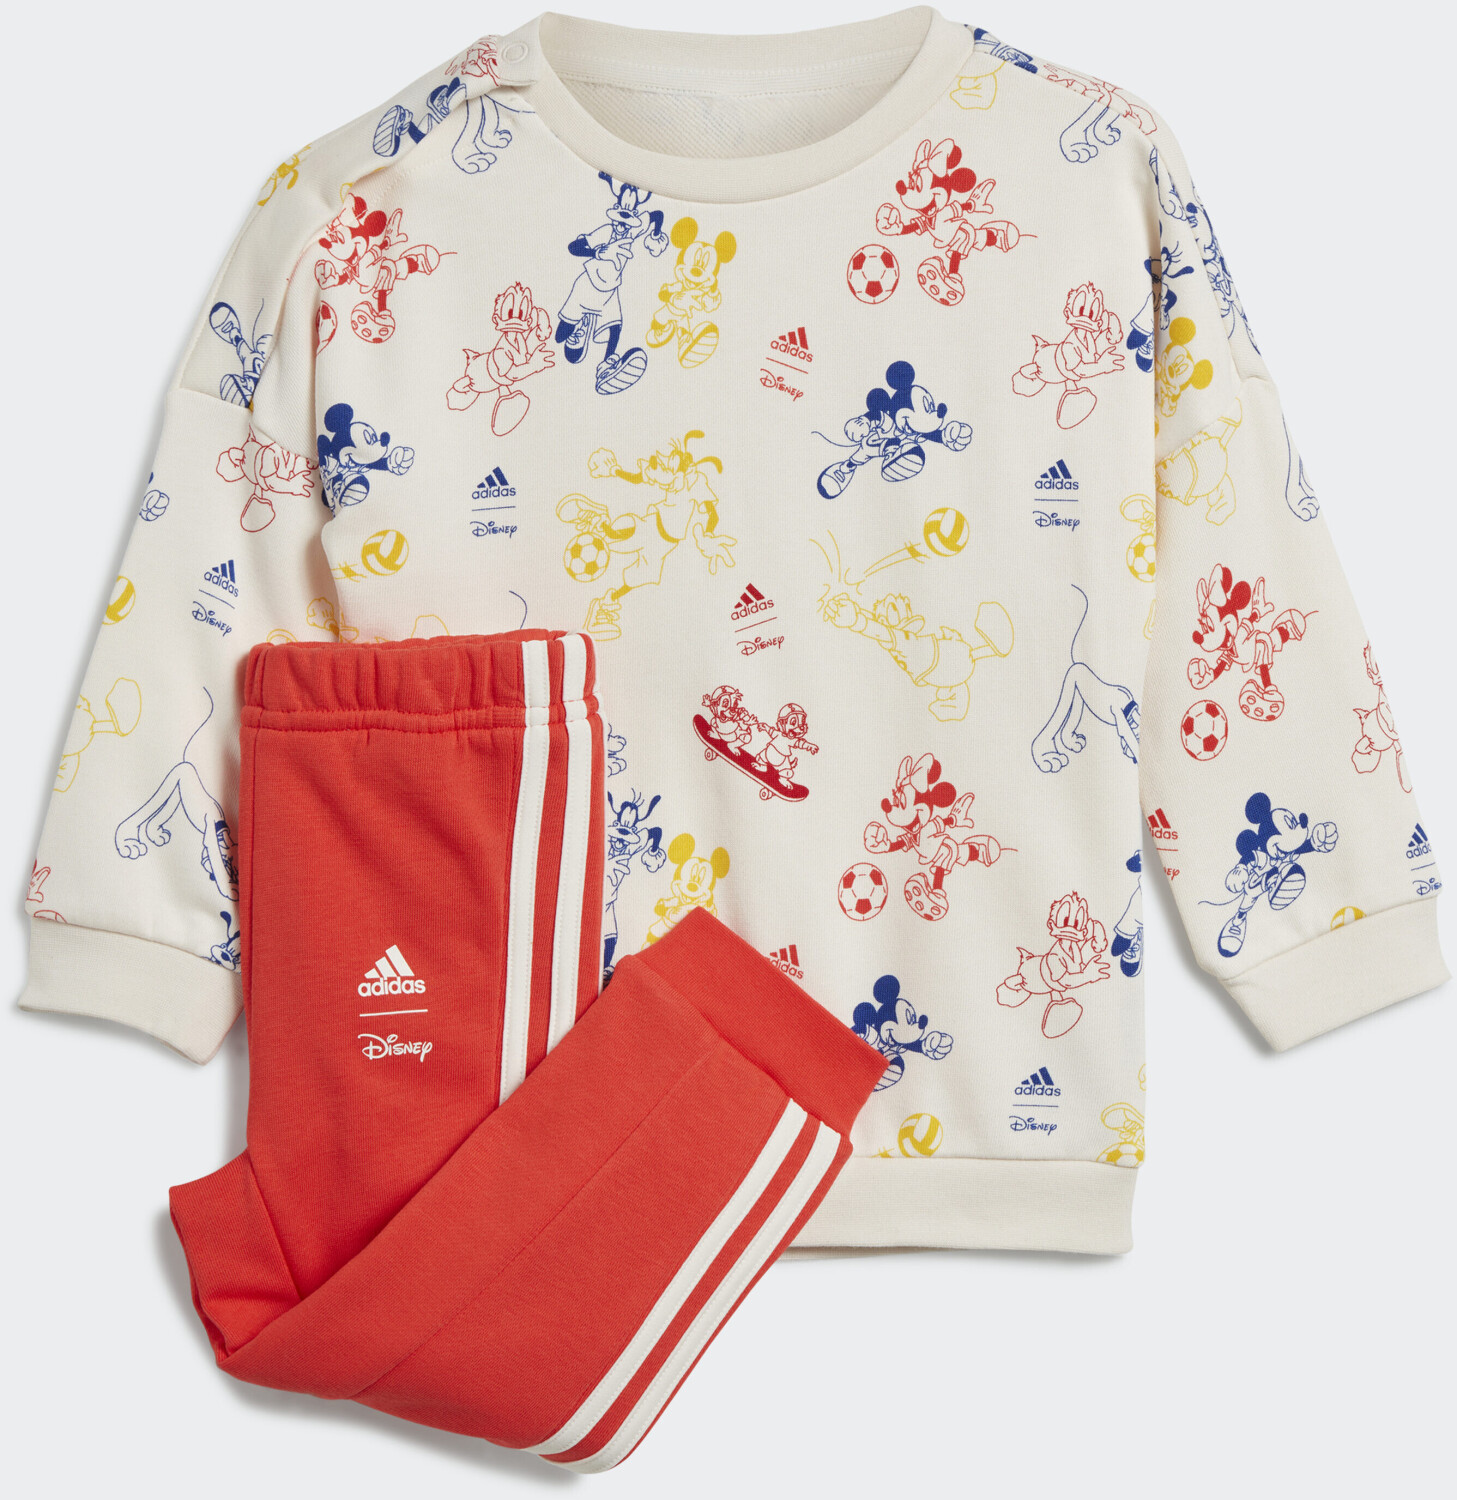 bei red/better Micky Jogginganzug Kids x 53,00 Preisvergleich Gold/bright Adidas Maus | Chalk white/bold € ab (IB4846) scarlet Disney